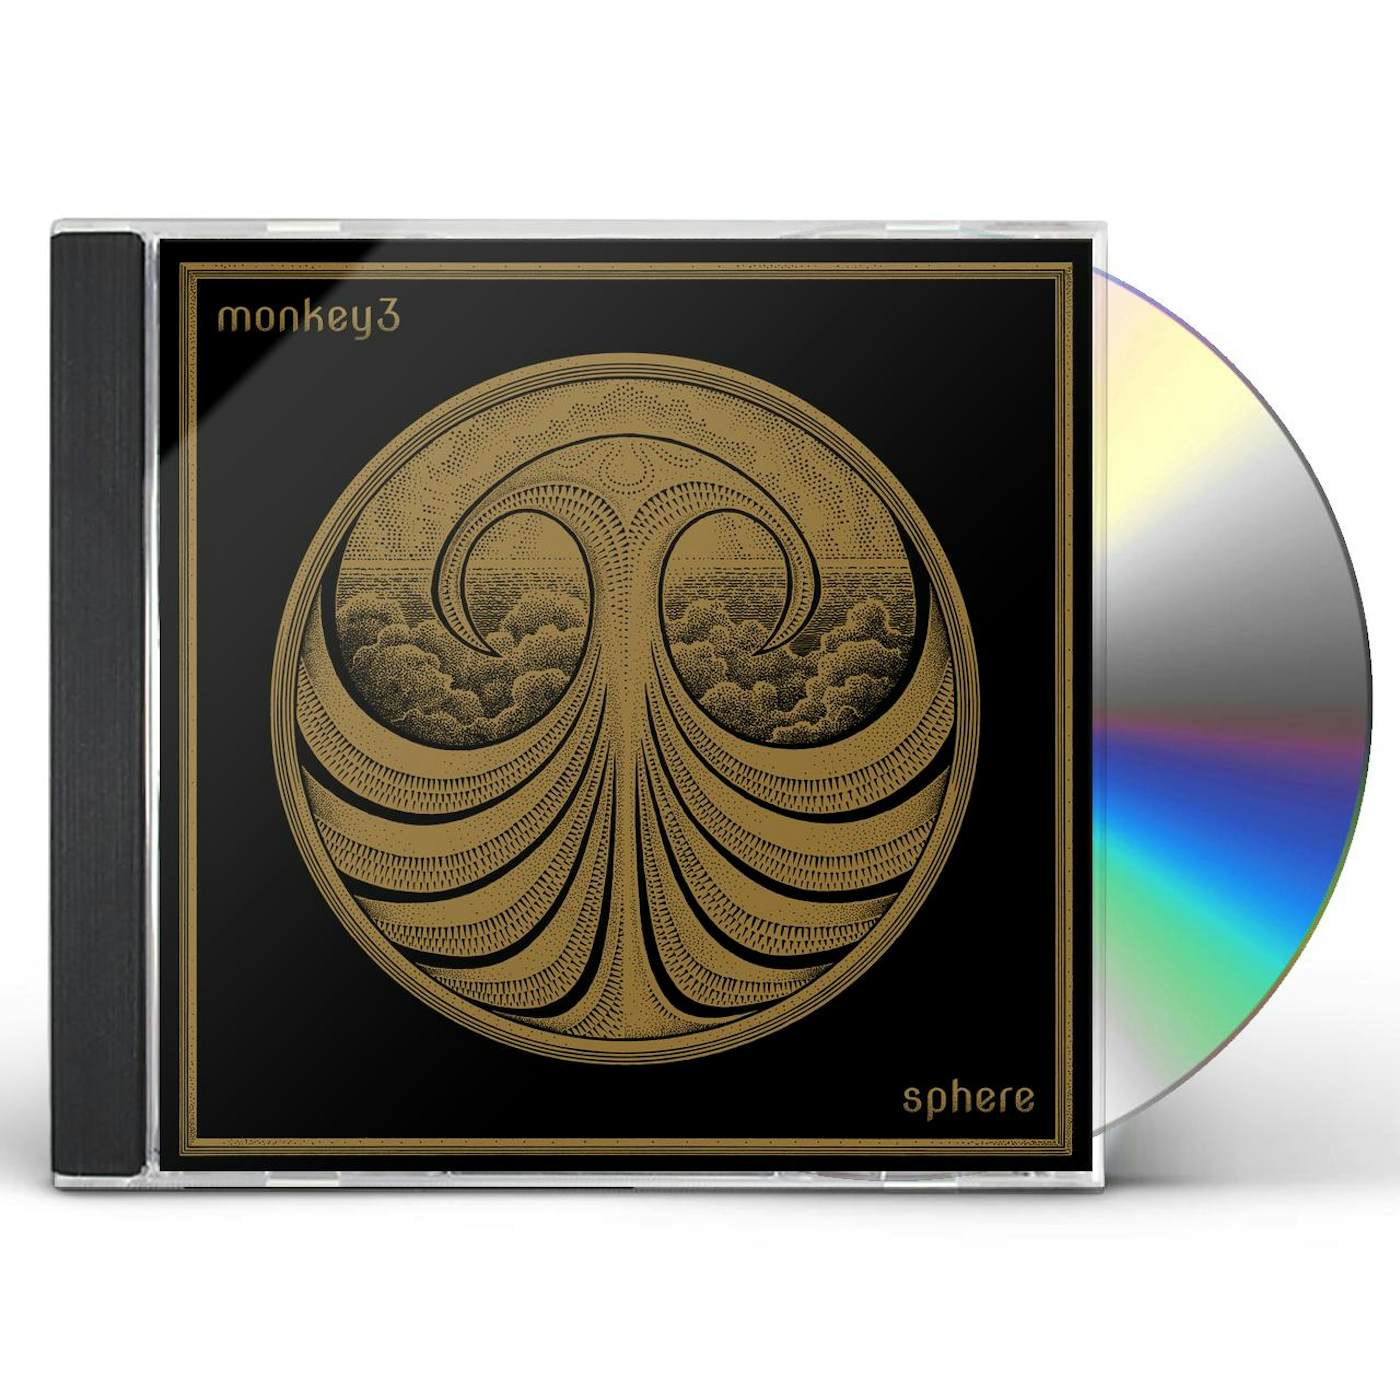 Monkey3 SPHERE CD